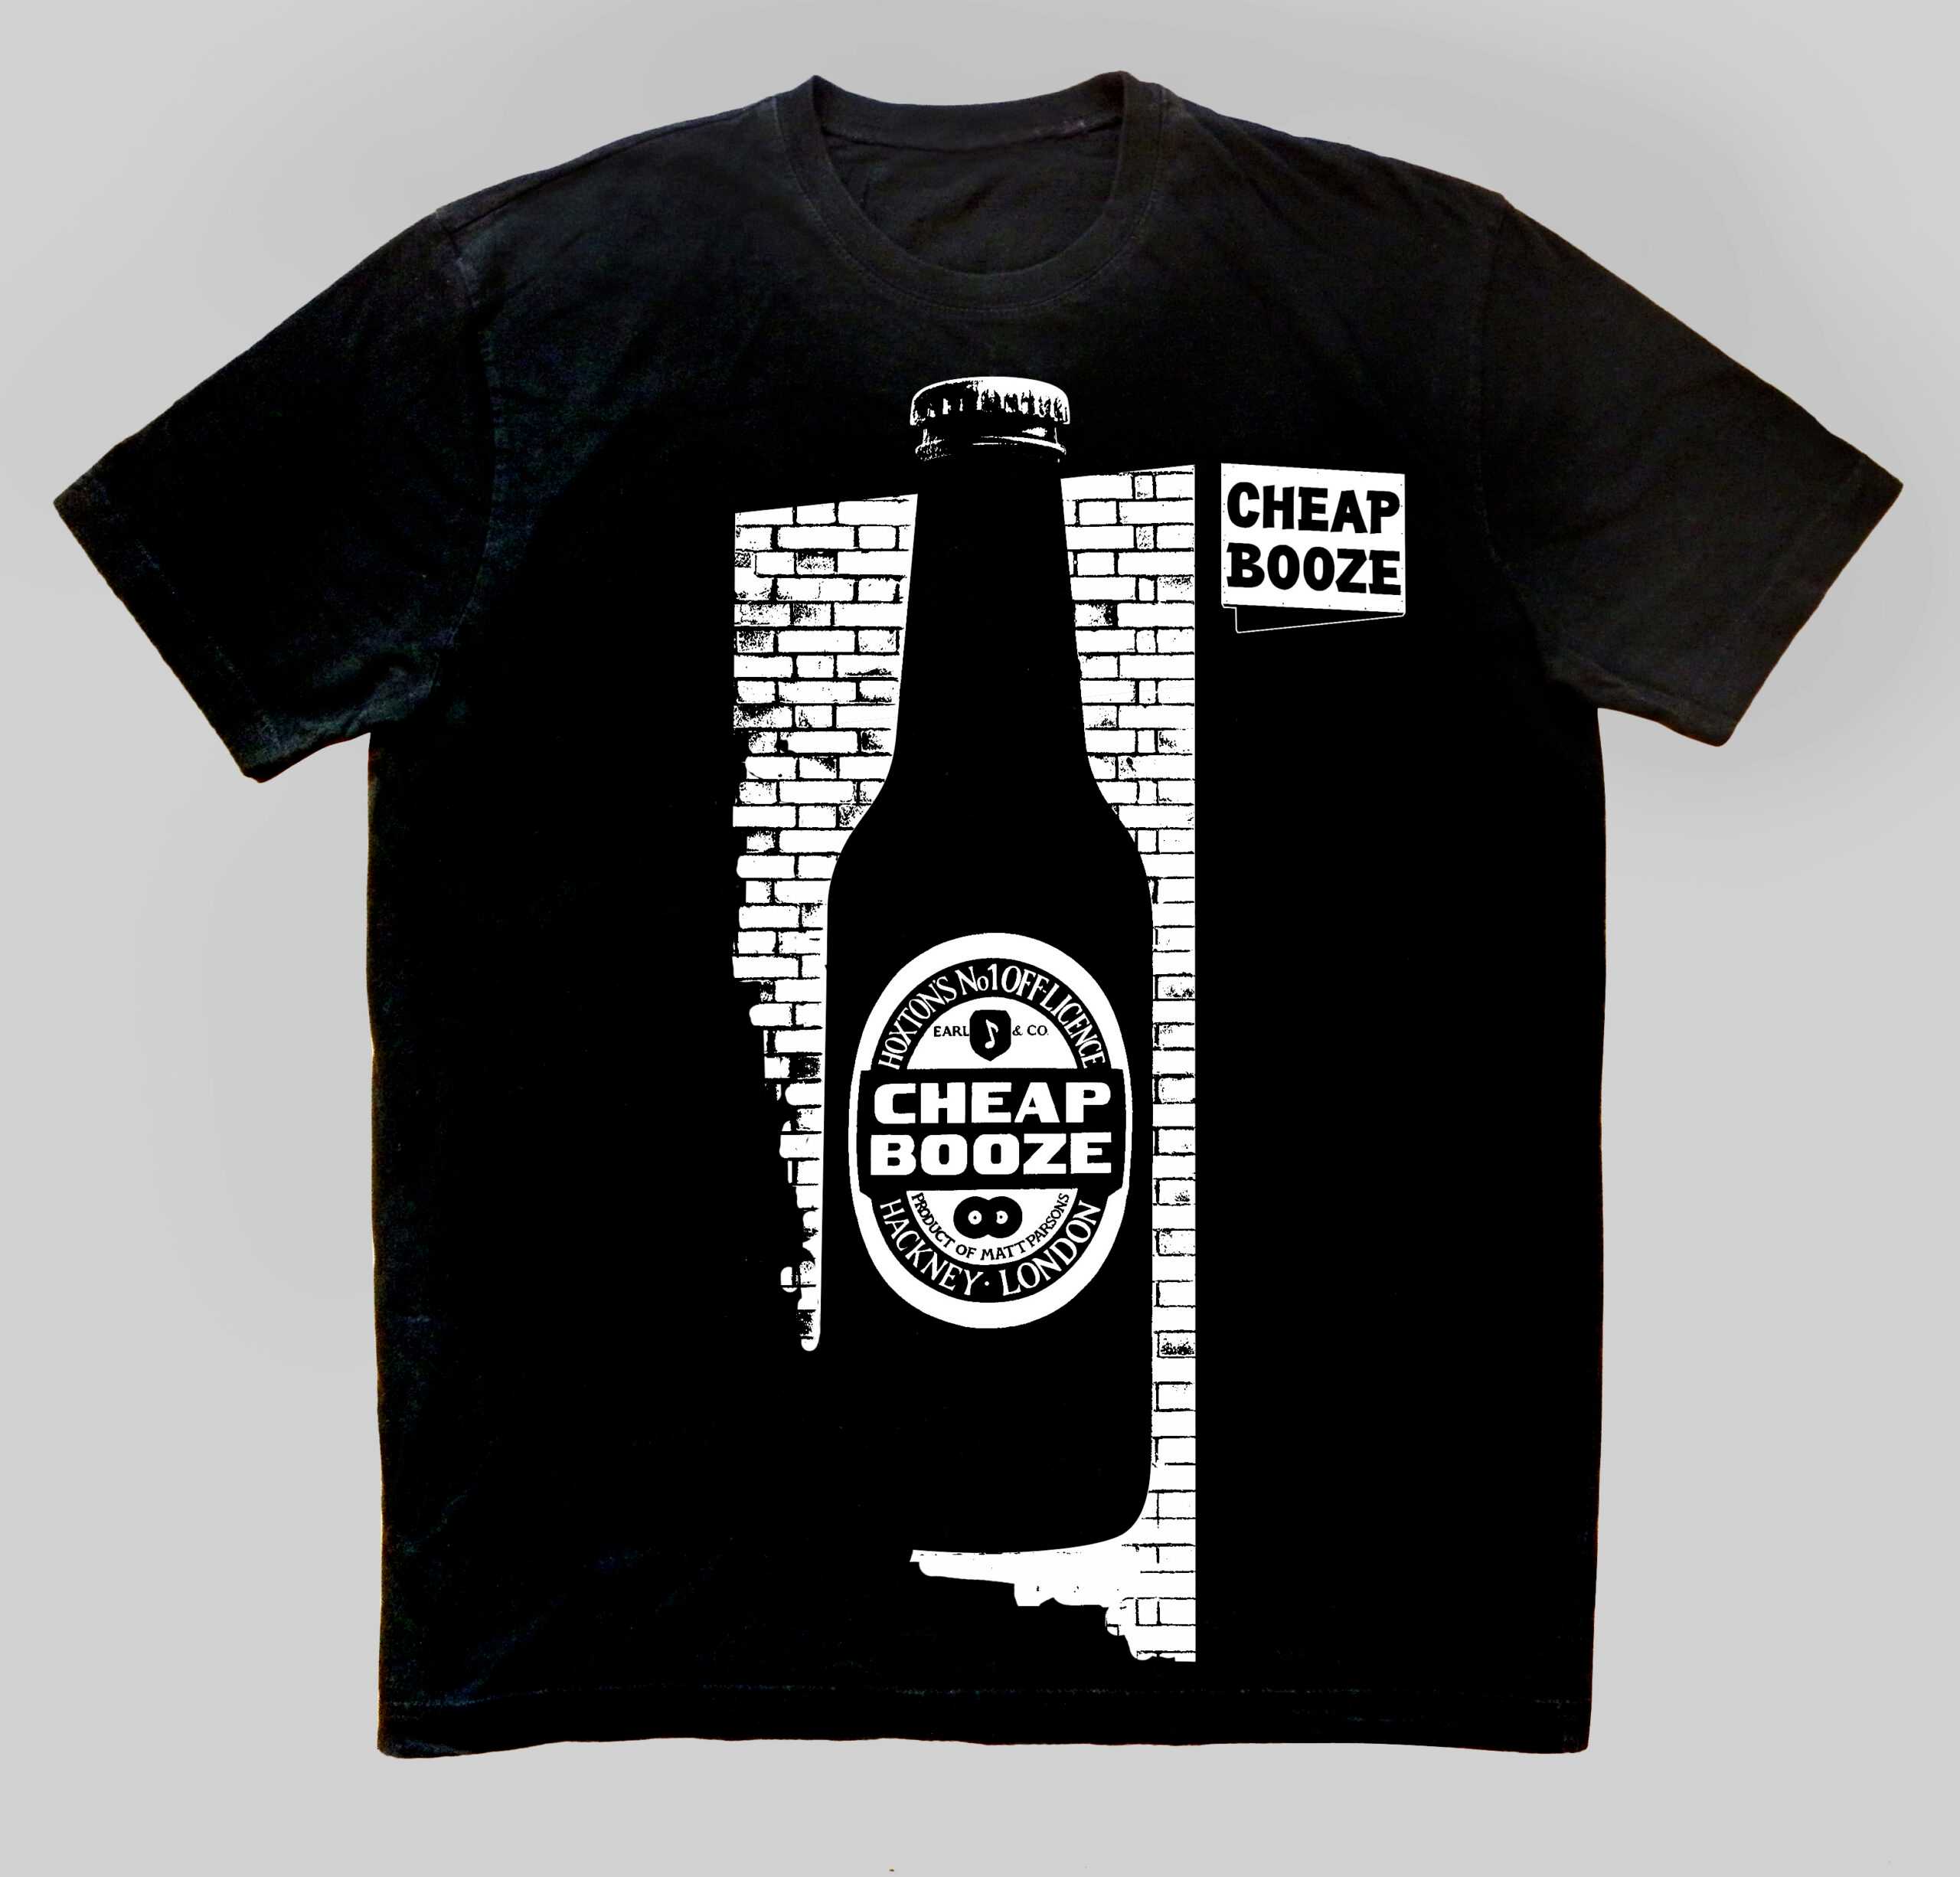 Cheap Booze T-Shirt: Variation – Bottle, brick, placard sign.